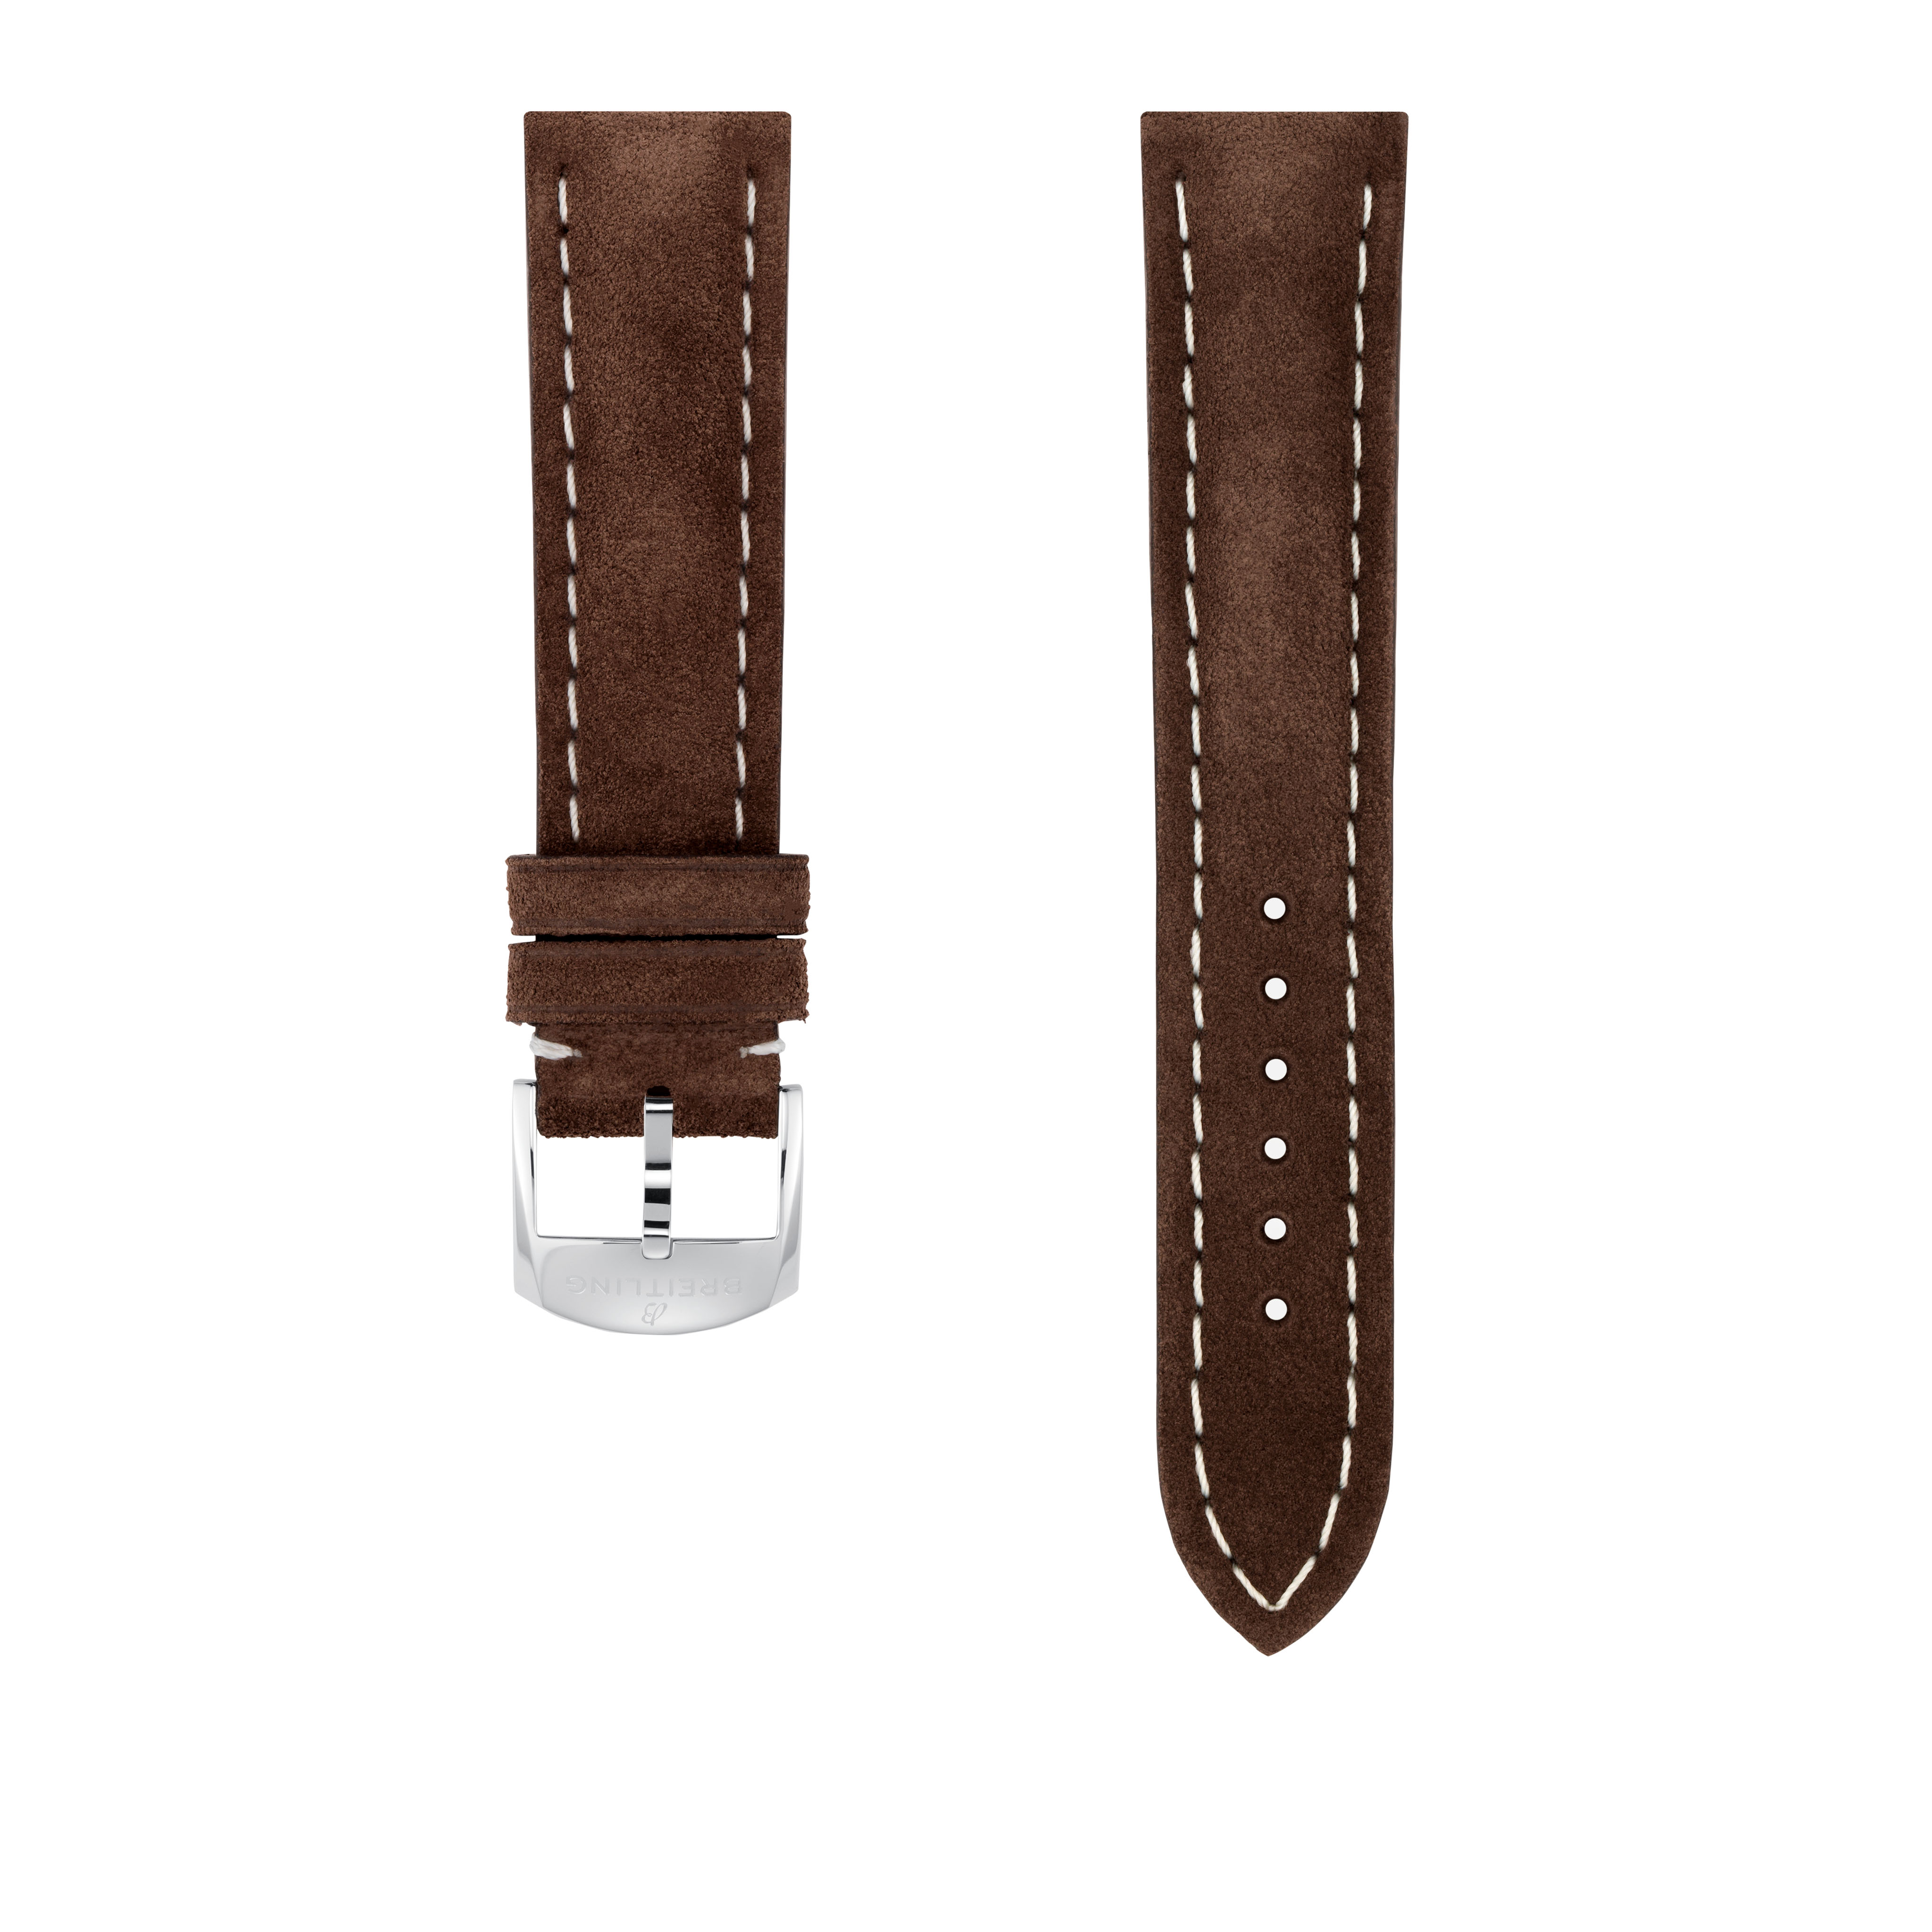 Brown nubuck calfskin leather strap - 20 mm